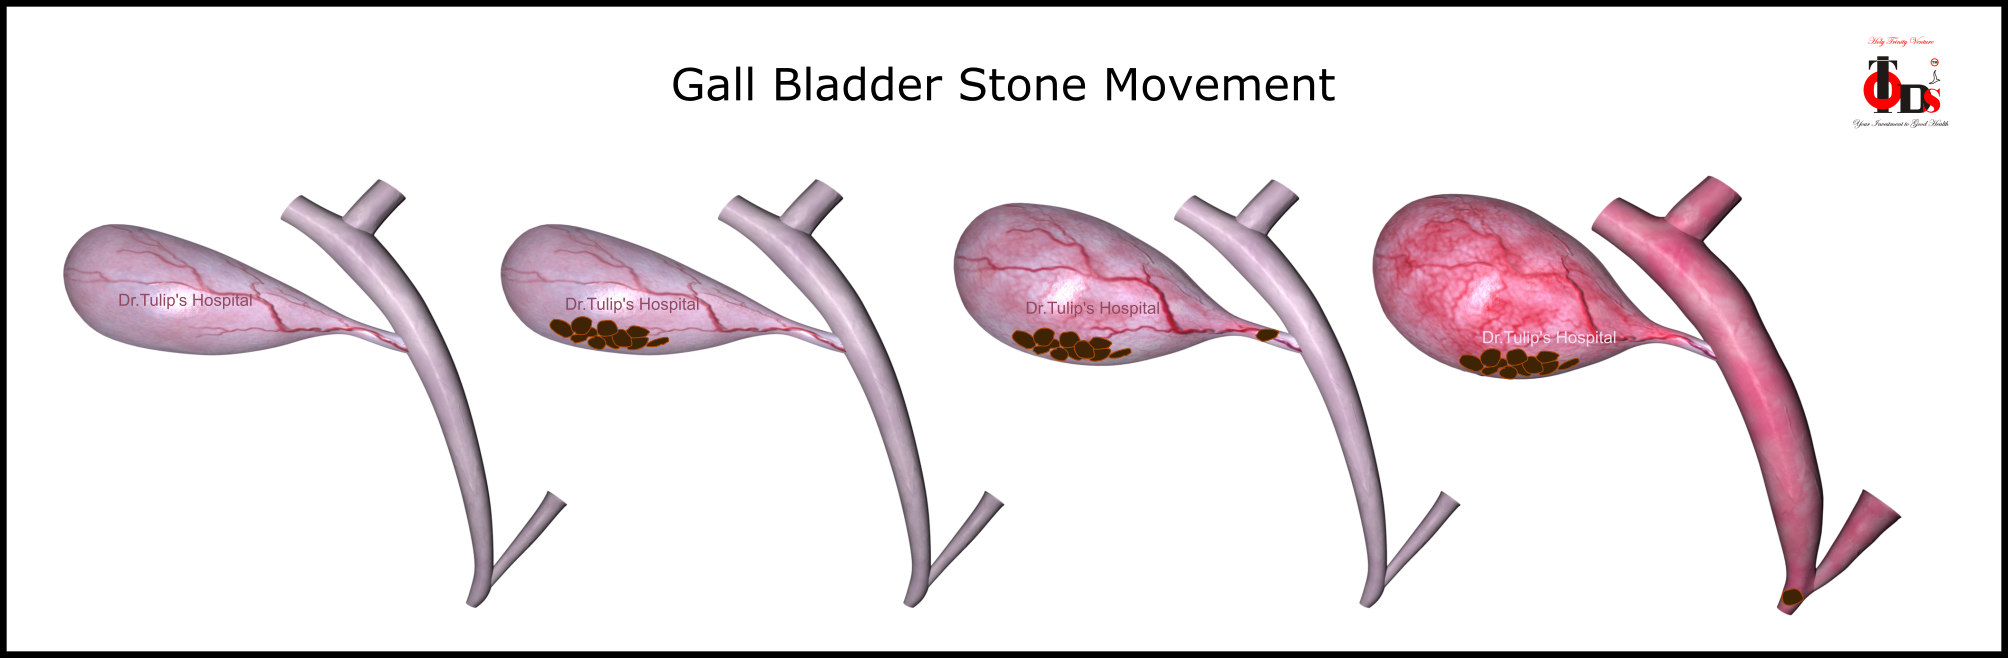 Gall bladder 